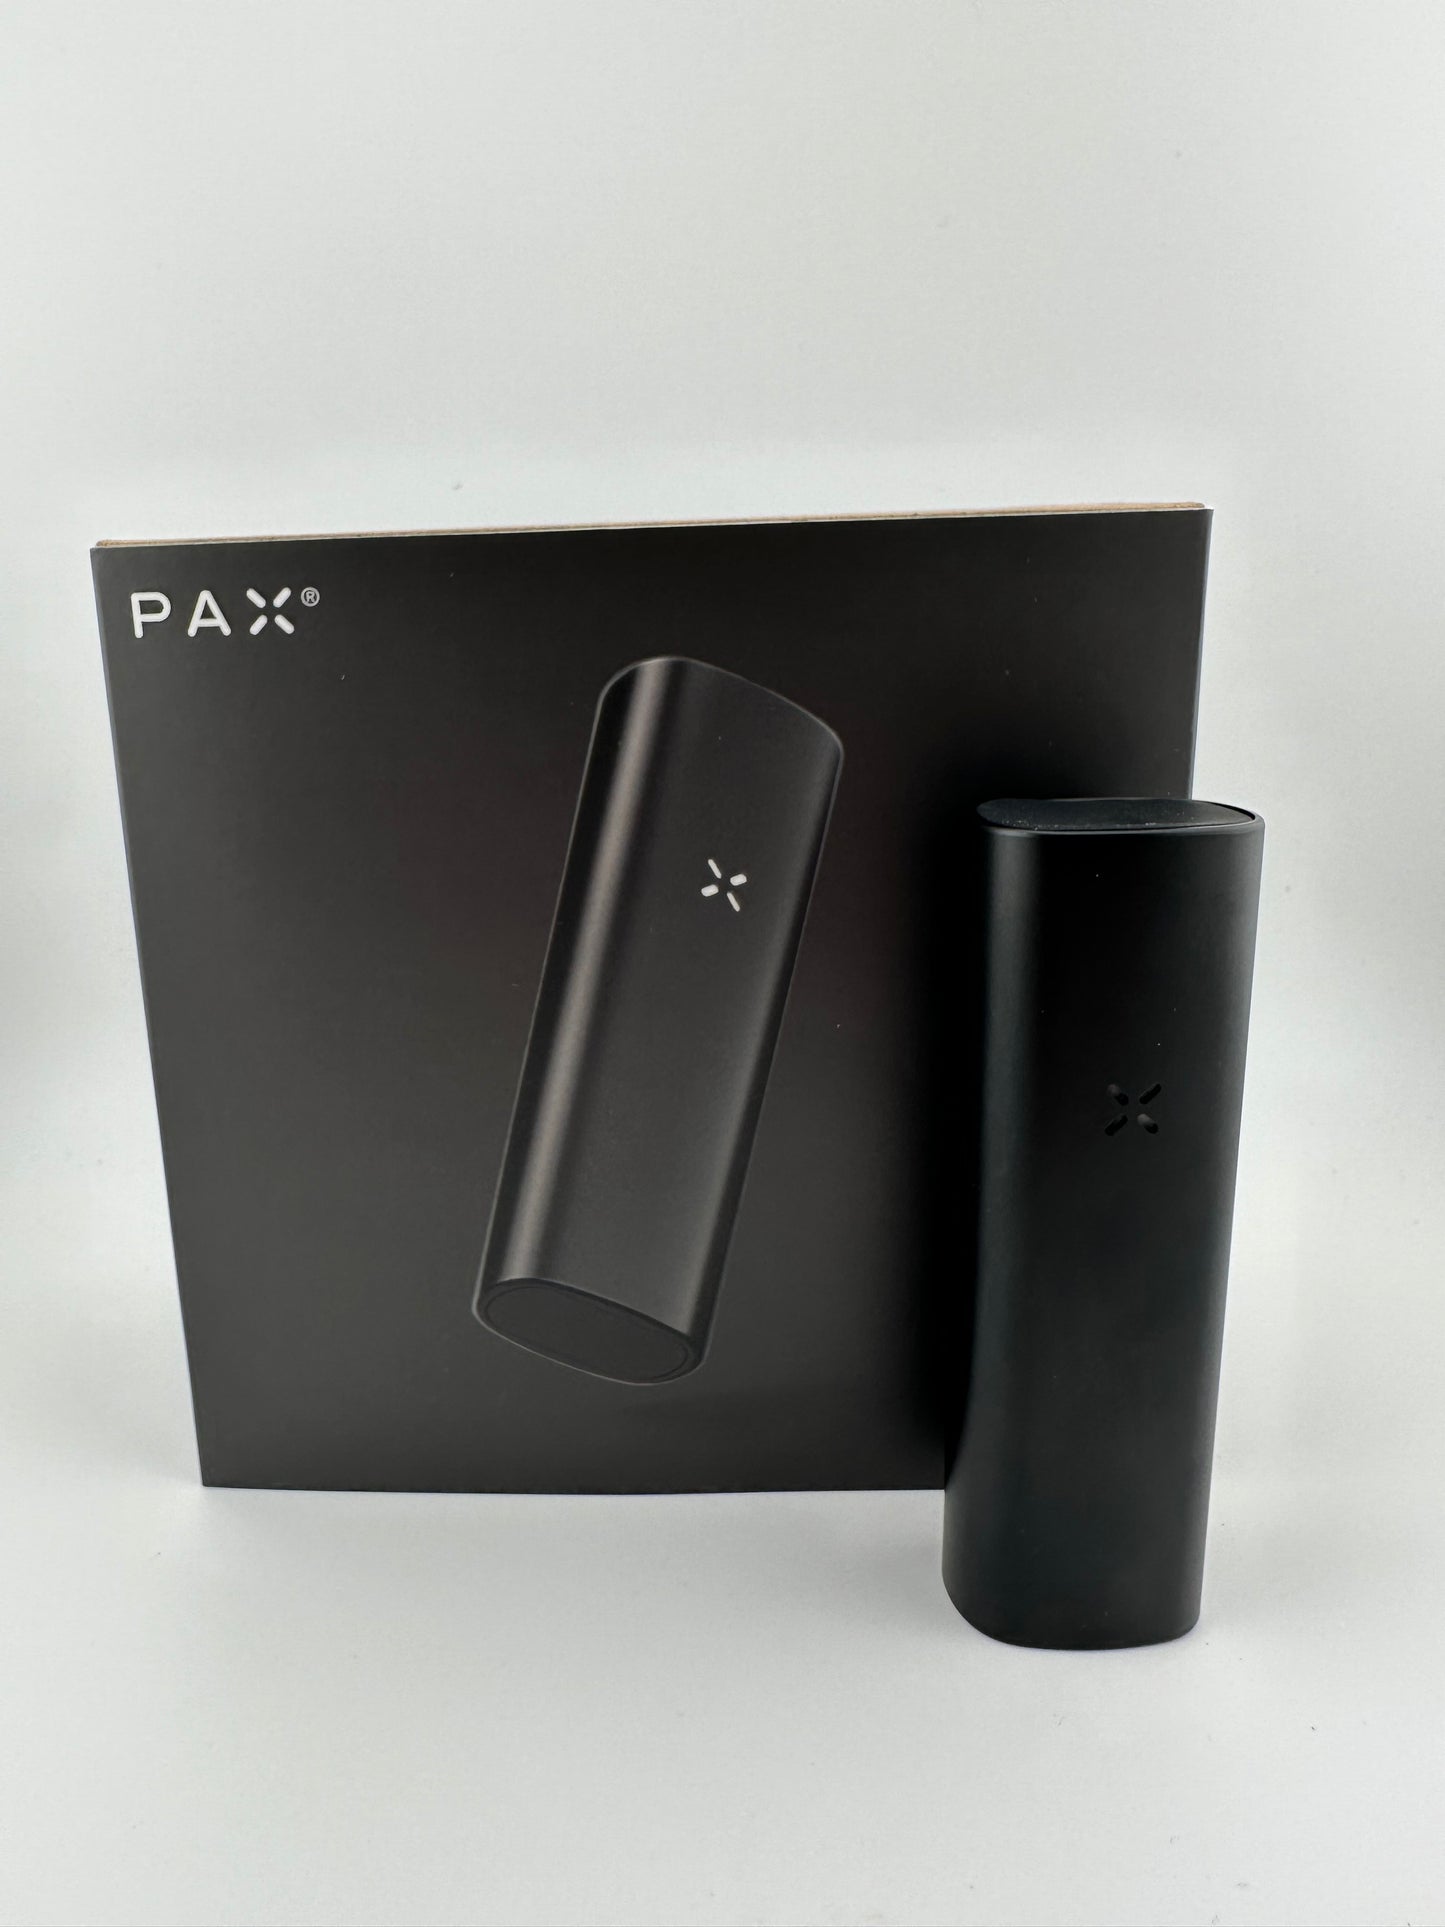 Pax Labs Pax Plus Herbal Vaporizer